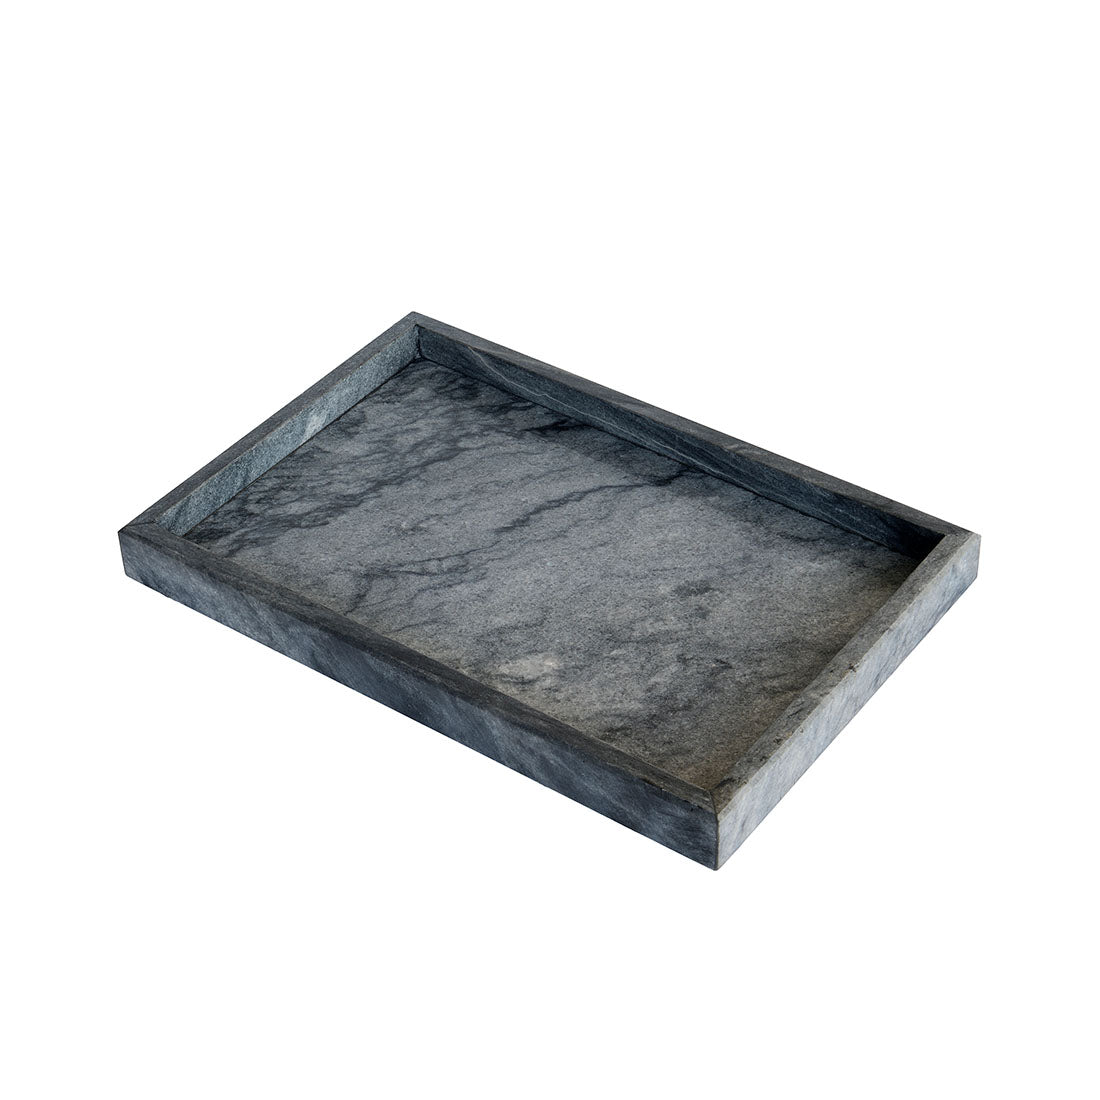 Marbi marble tray - black - 20x30 cm